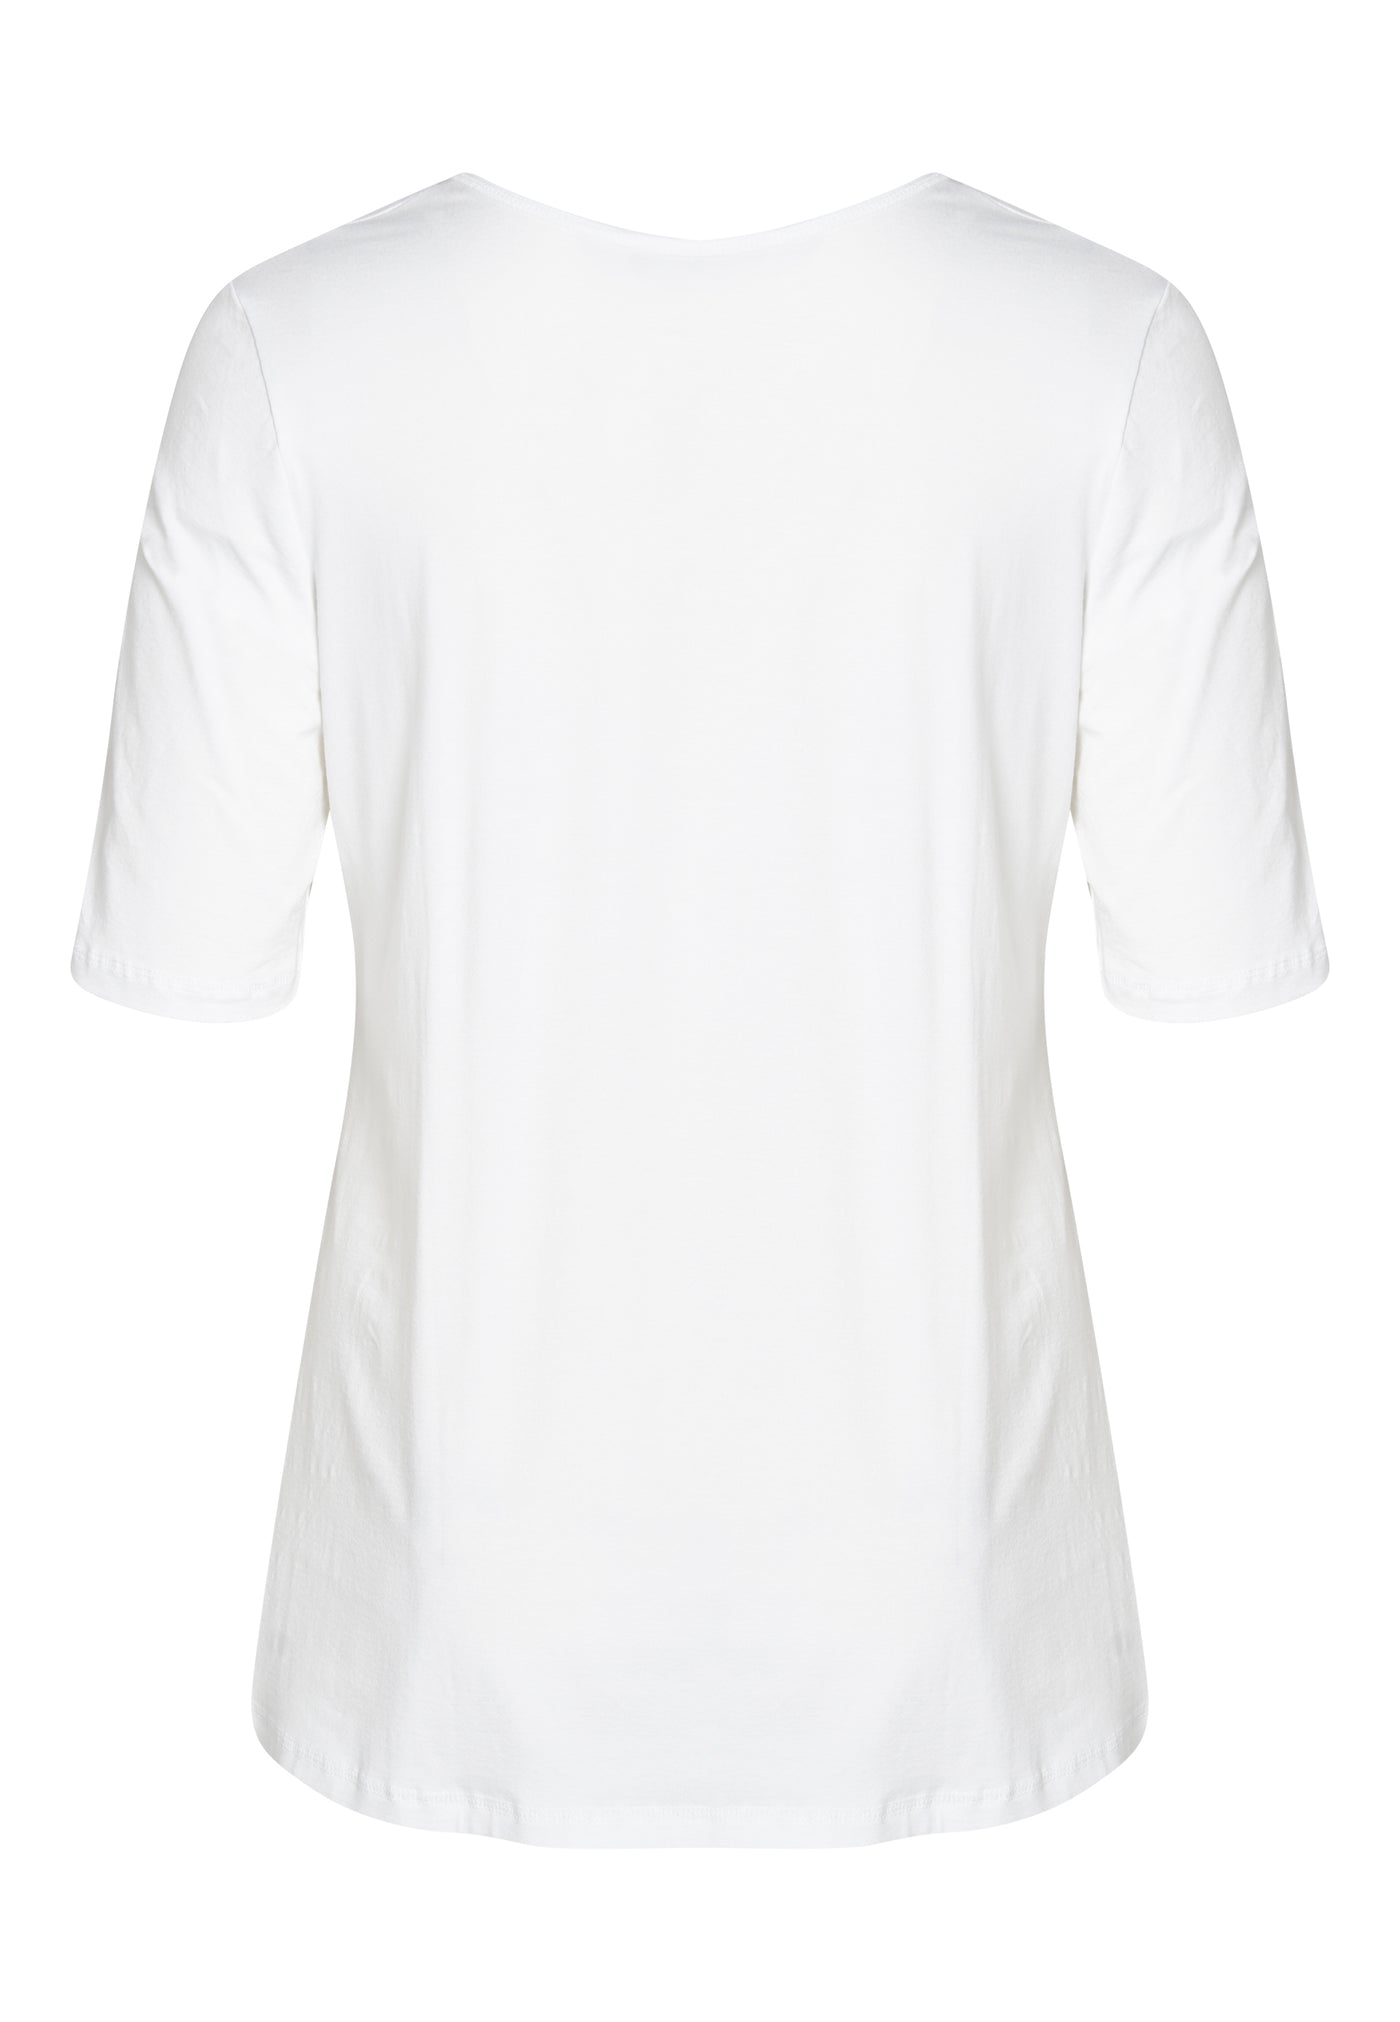 Sempre Piu SEShirt NOOS Skjortebluser 002 Optical white